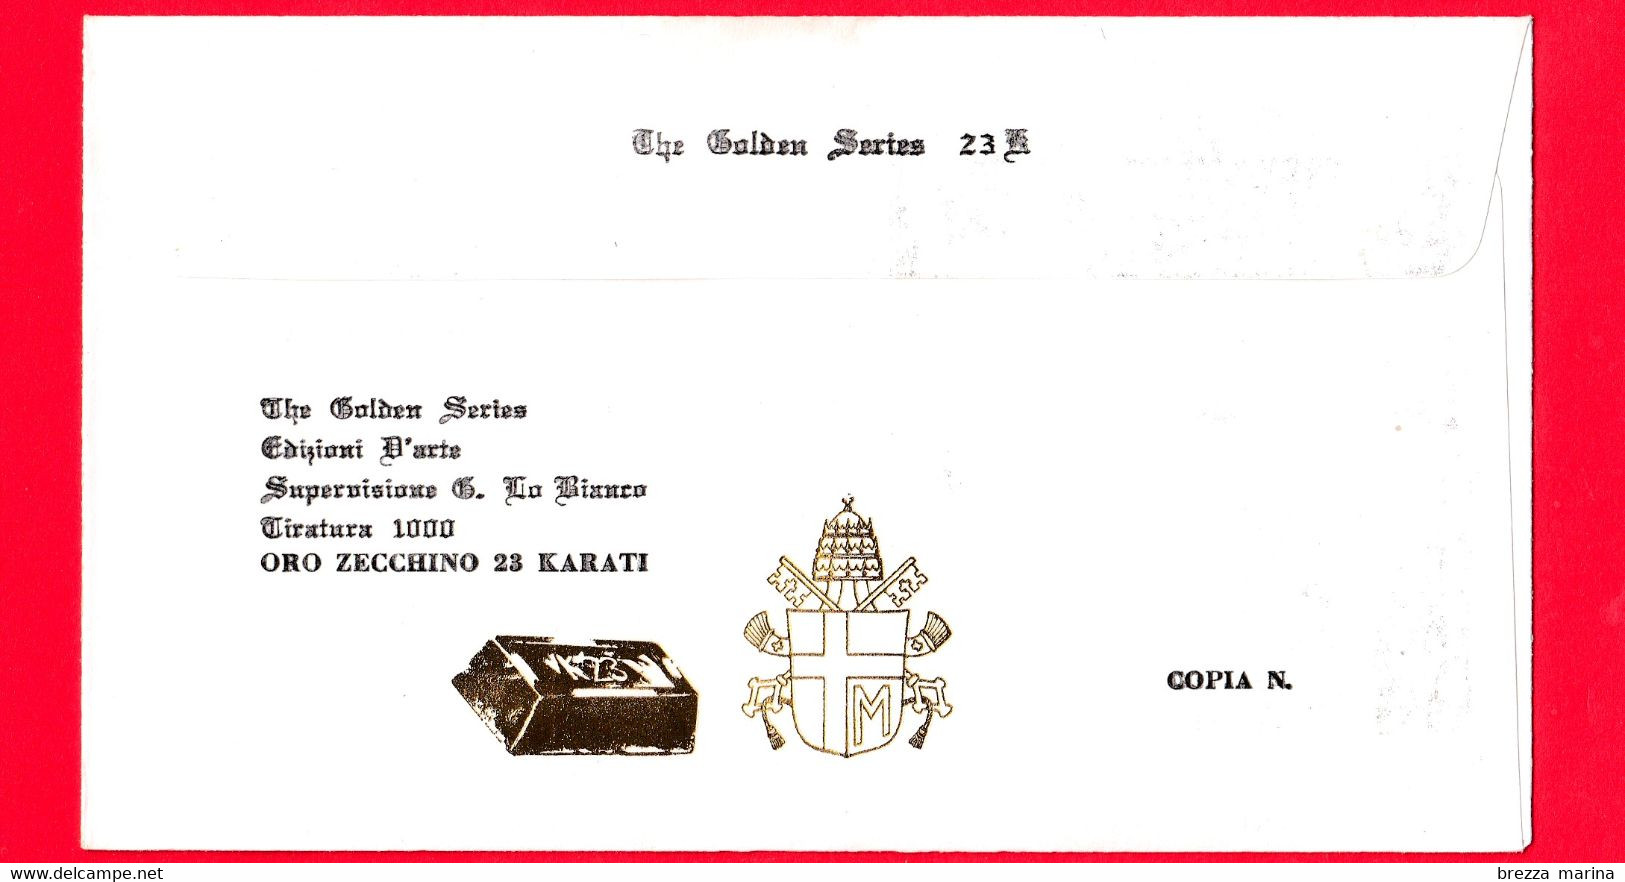 UNGHERIA - 1991 - Busta Golden Series 23 K - Visita Di Giovanni Paolo II A Mariapocs - Annullo 18-08-1991 - Brieven En Documenten